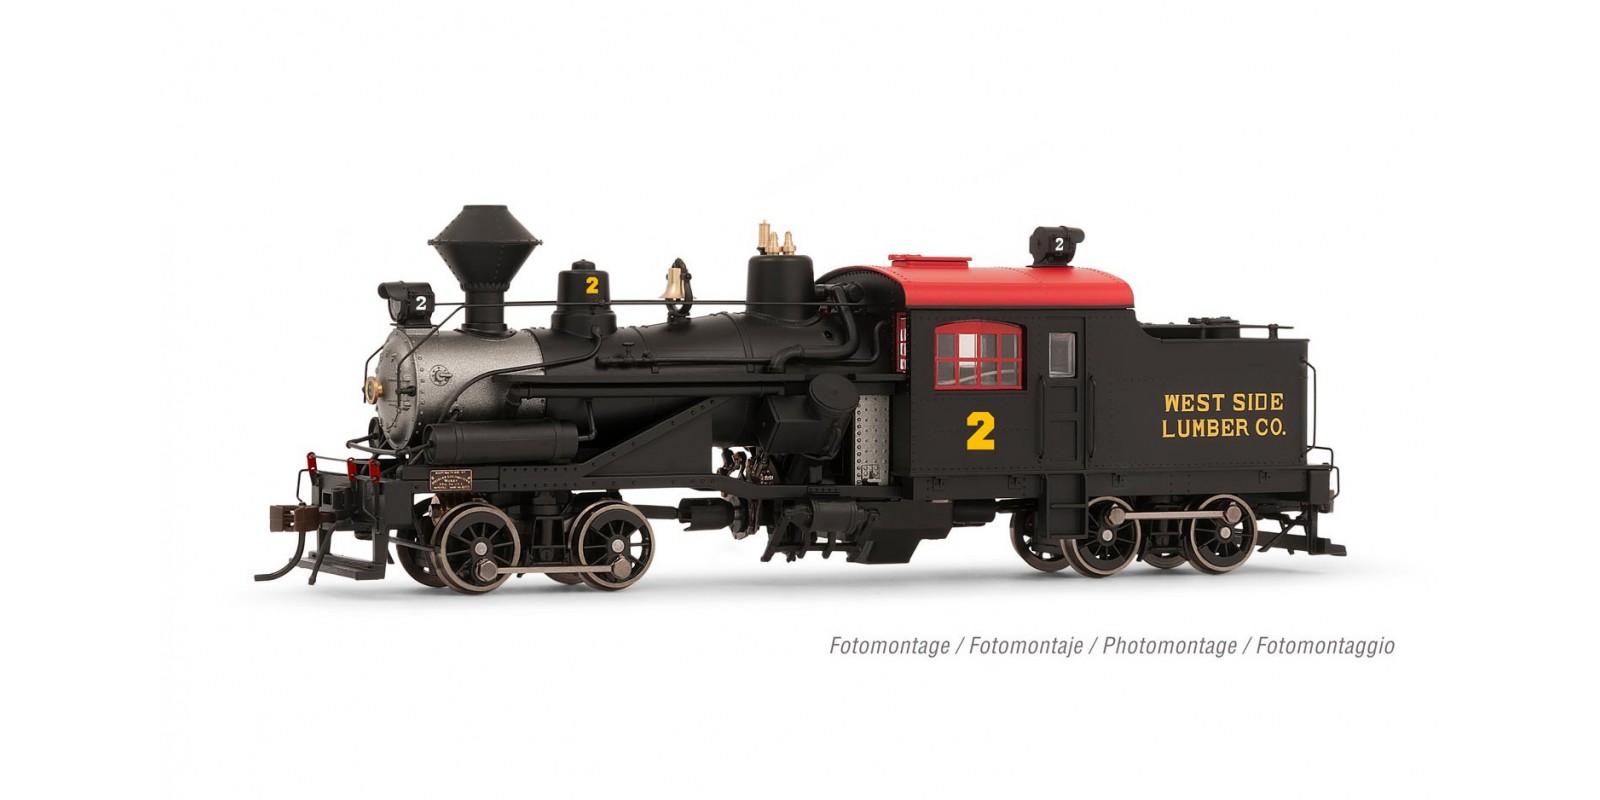 RI2880 Heisler steam locomotive, 2 trucks "Westside Lumber Co."